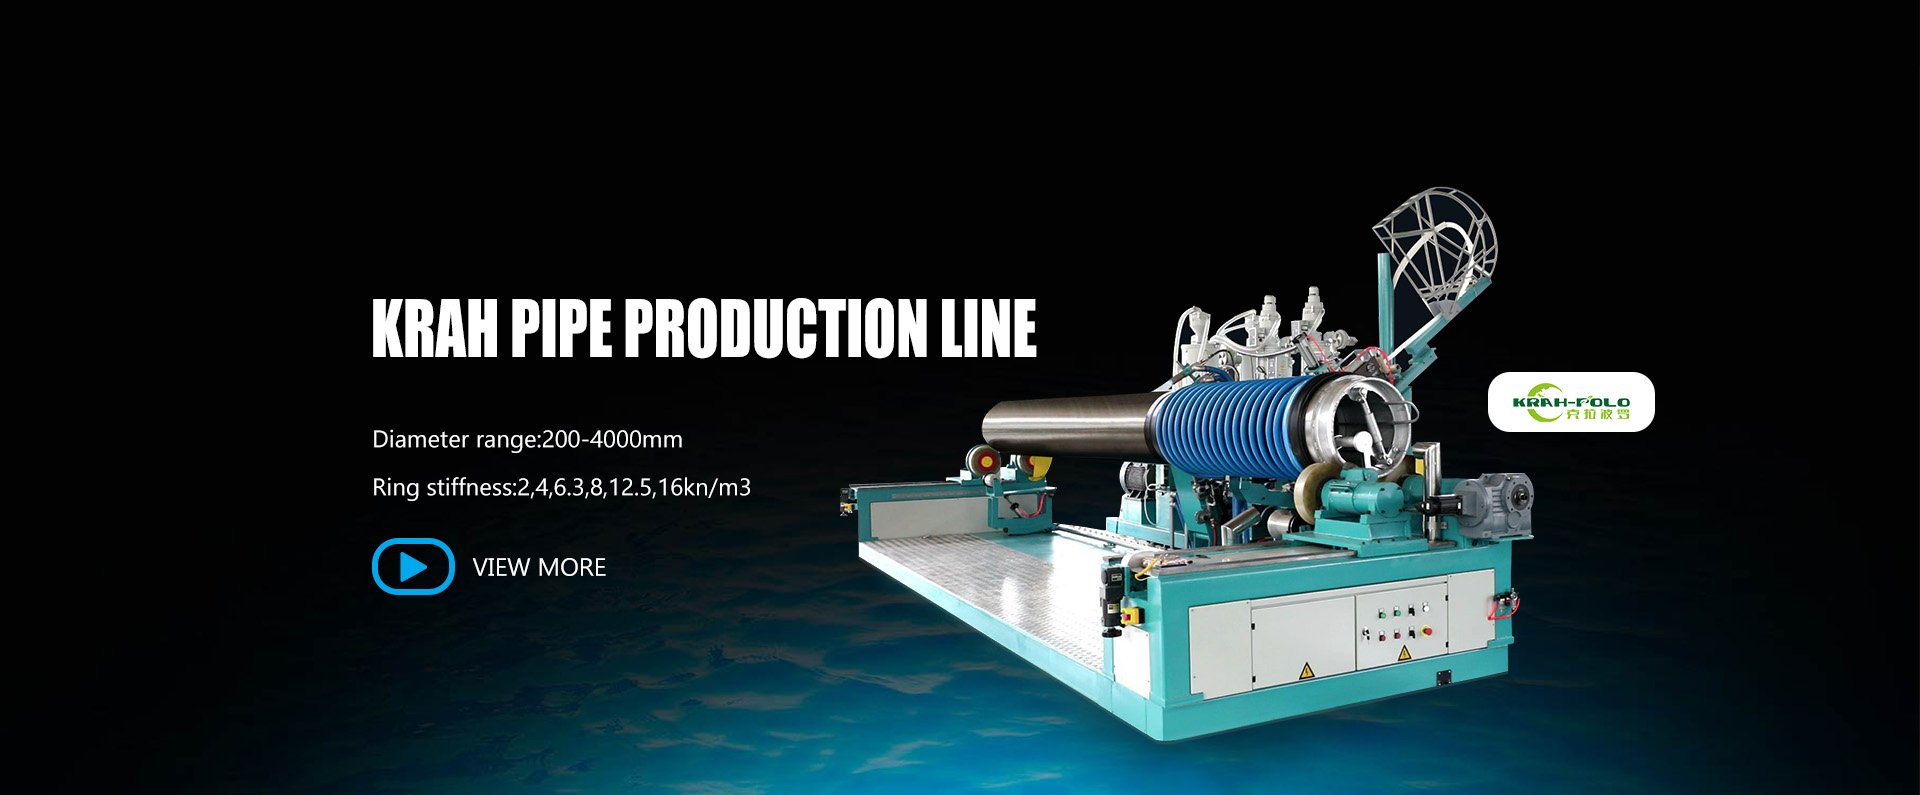 KRAH PIPE Production Line